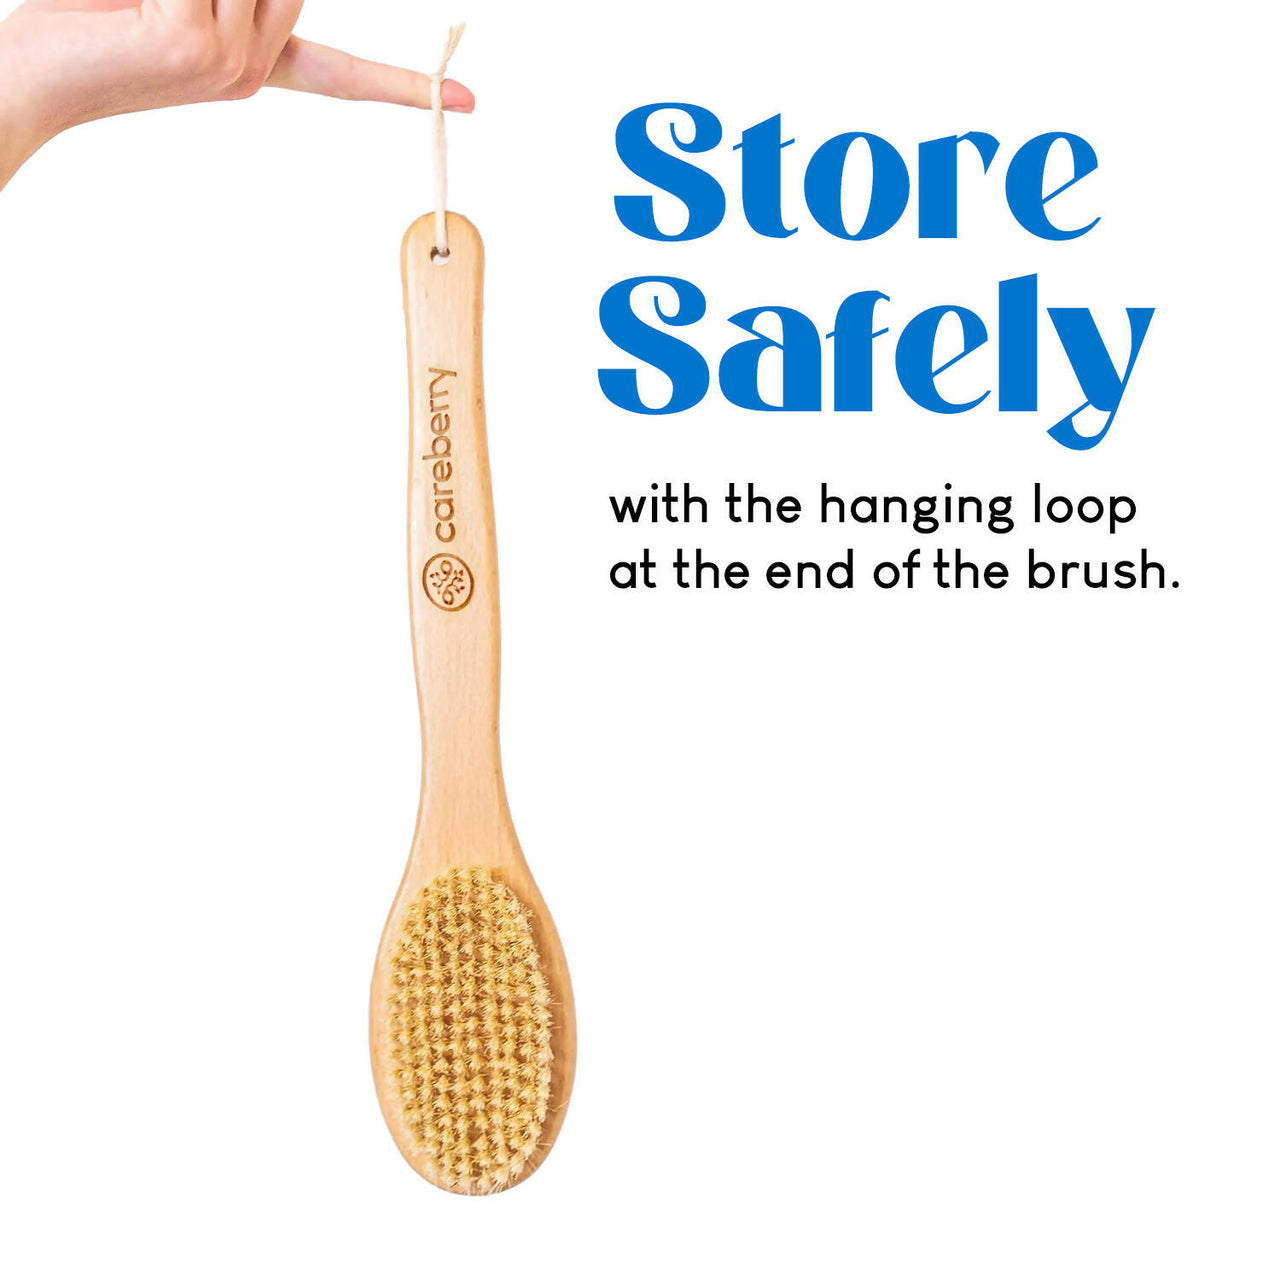 Careberry Dual-Action Bamboo Body Brush - Distacart